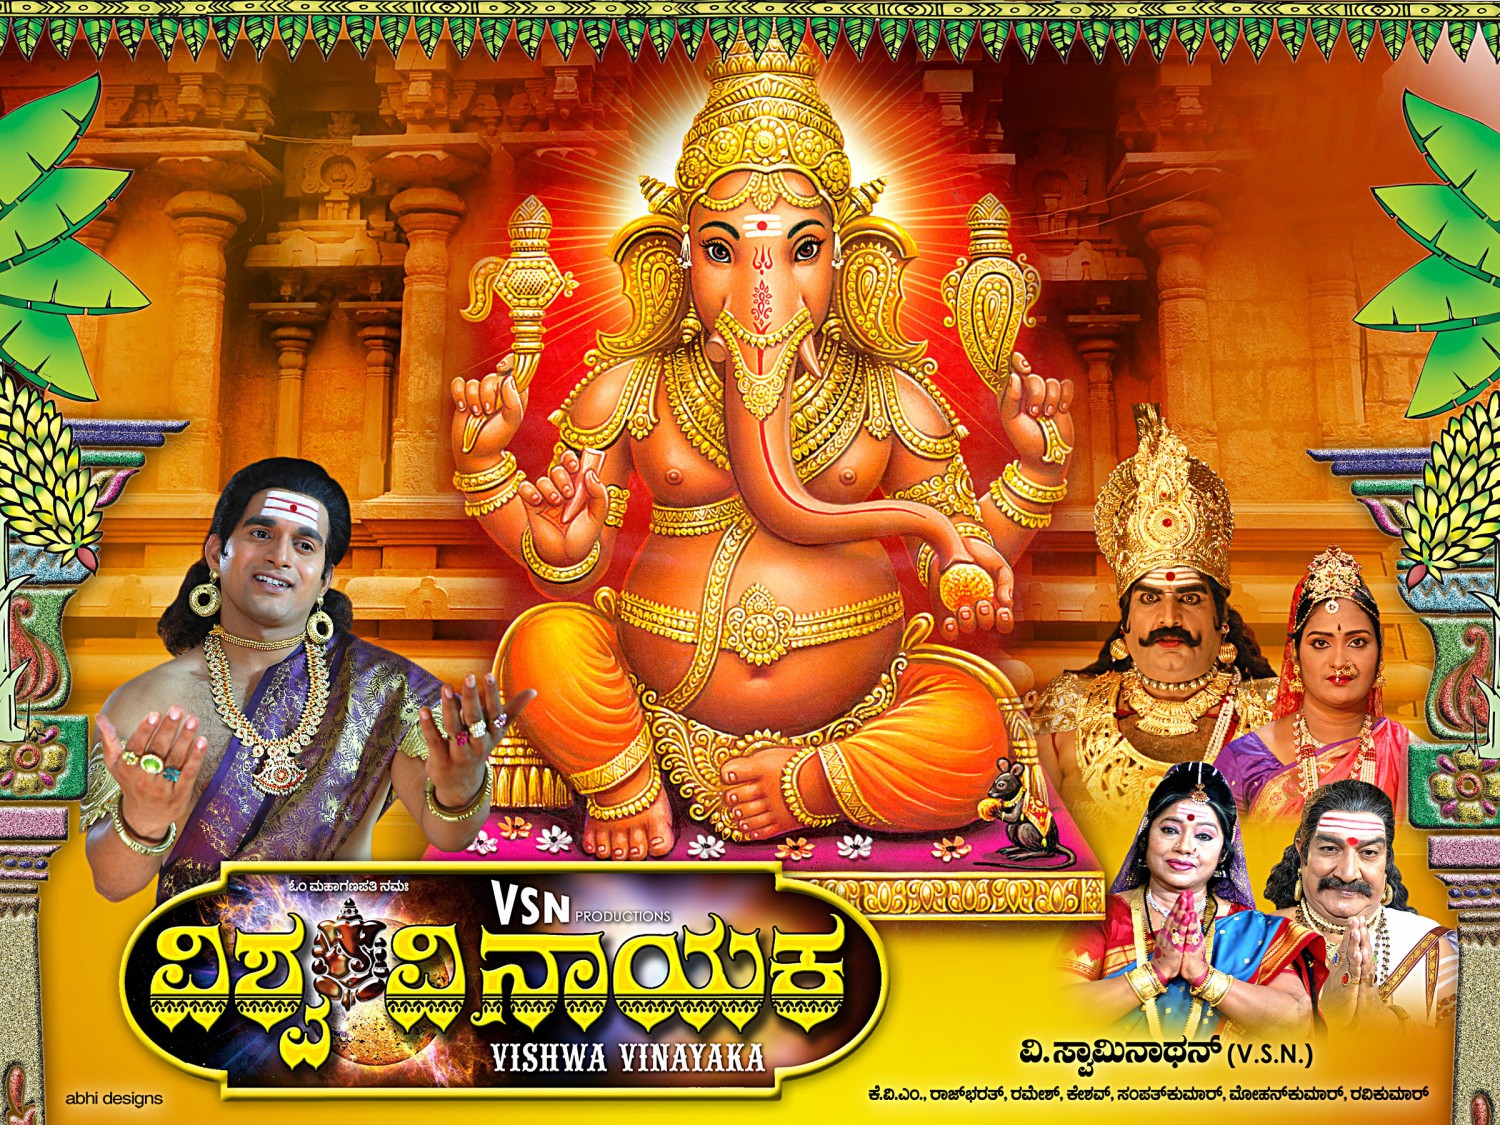 Extra Large Movie Poster Image for Vishwa Vinayaka (#2 of 7)